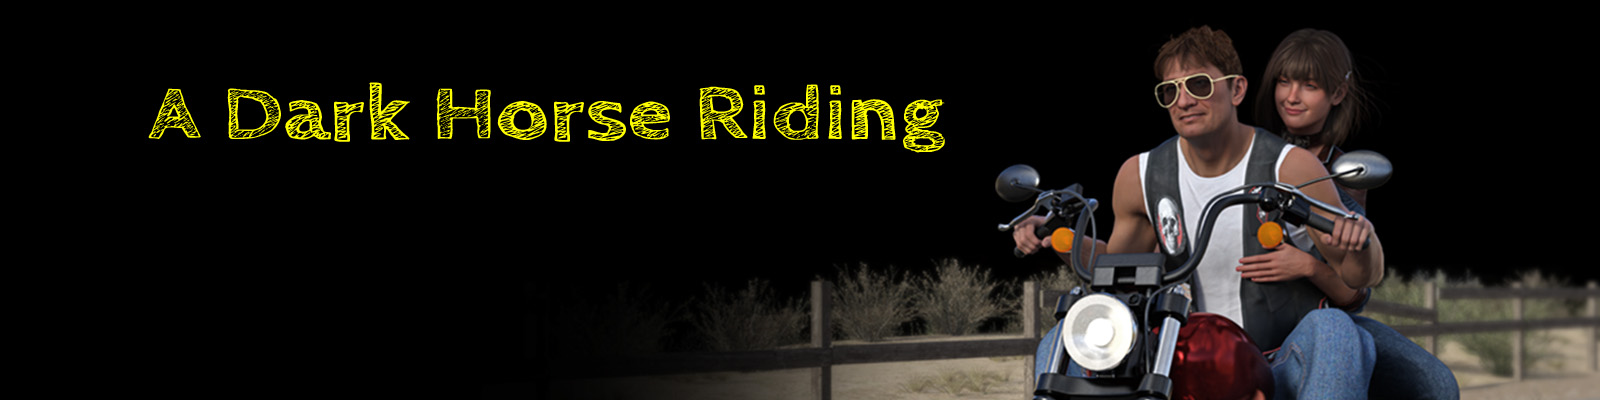 A Dark Horse Riding poster